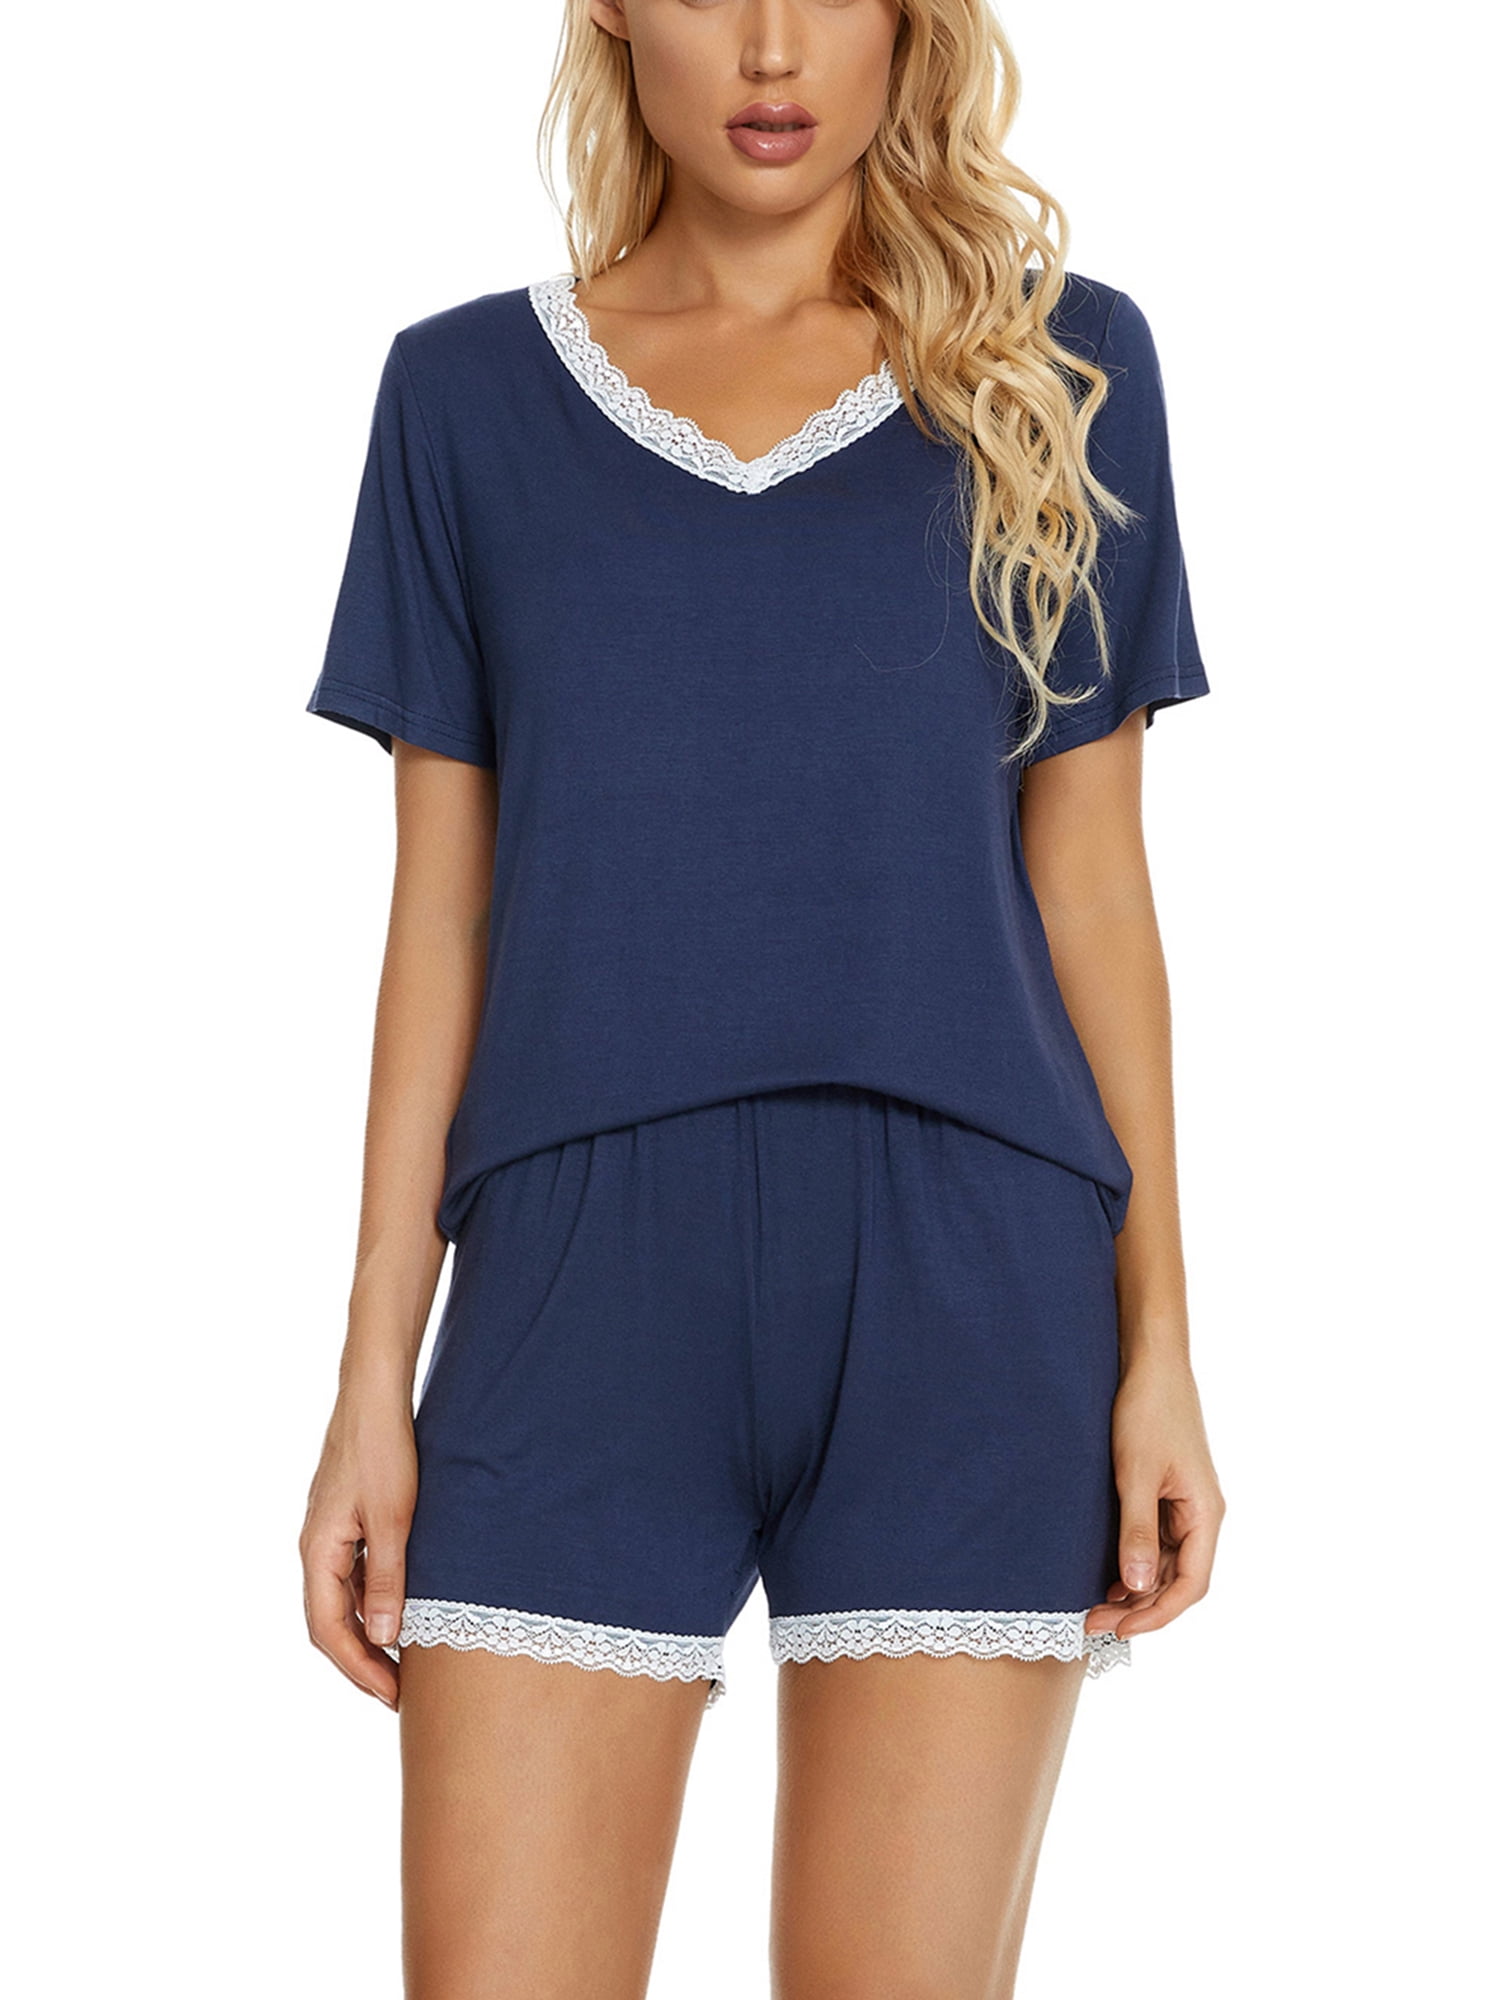 cheibear Women's Pajama Sleep Shirt Nightwear Sleepwear Lounge